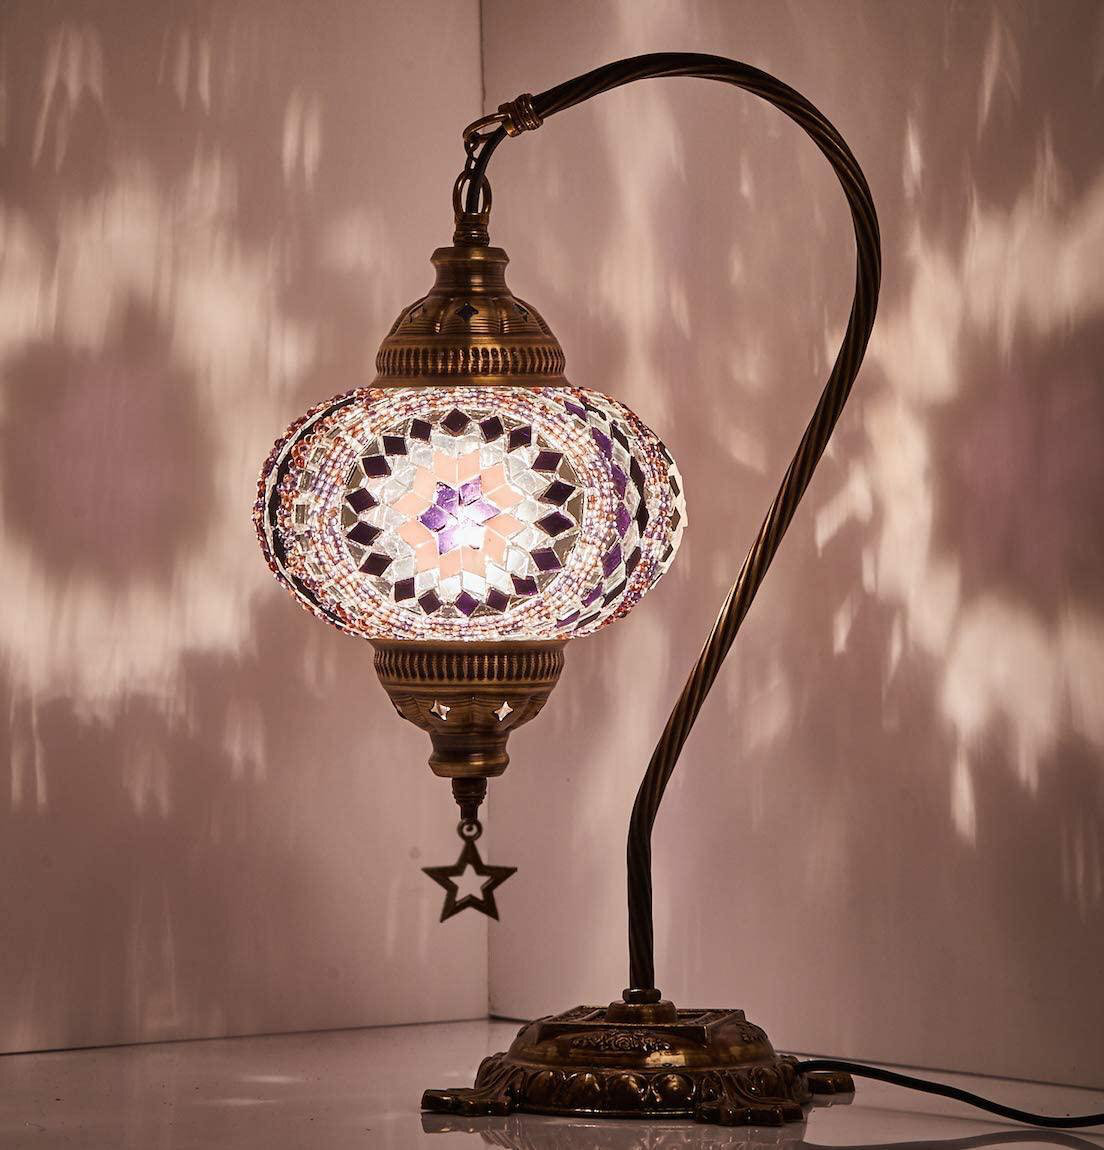 Turkish Moroccan Mosaic Table Lamp With US Plug & Socket, Swan Neck Handmade Desk Bedside Table Night Lamp Decorative Tiffany Lamp Light, Antique